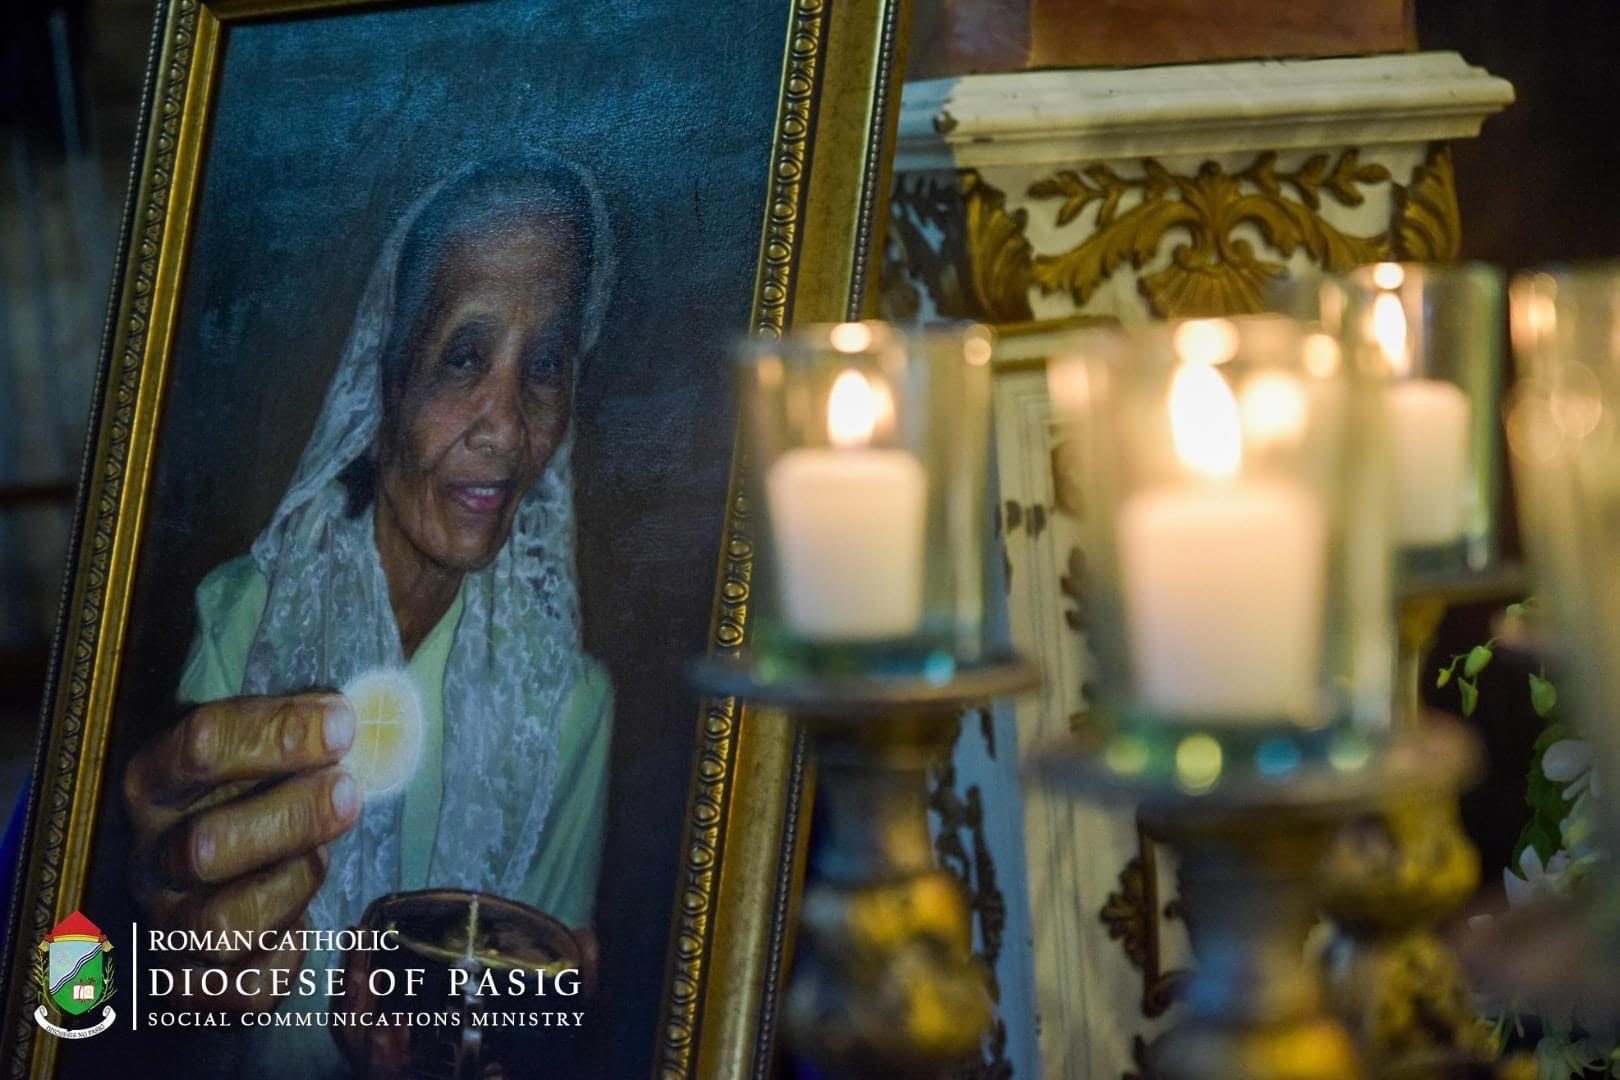 Will Ka Luring Franco, a Taguig catechist, be the next Filipino saint?